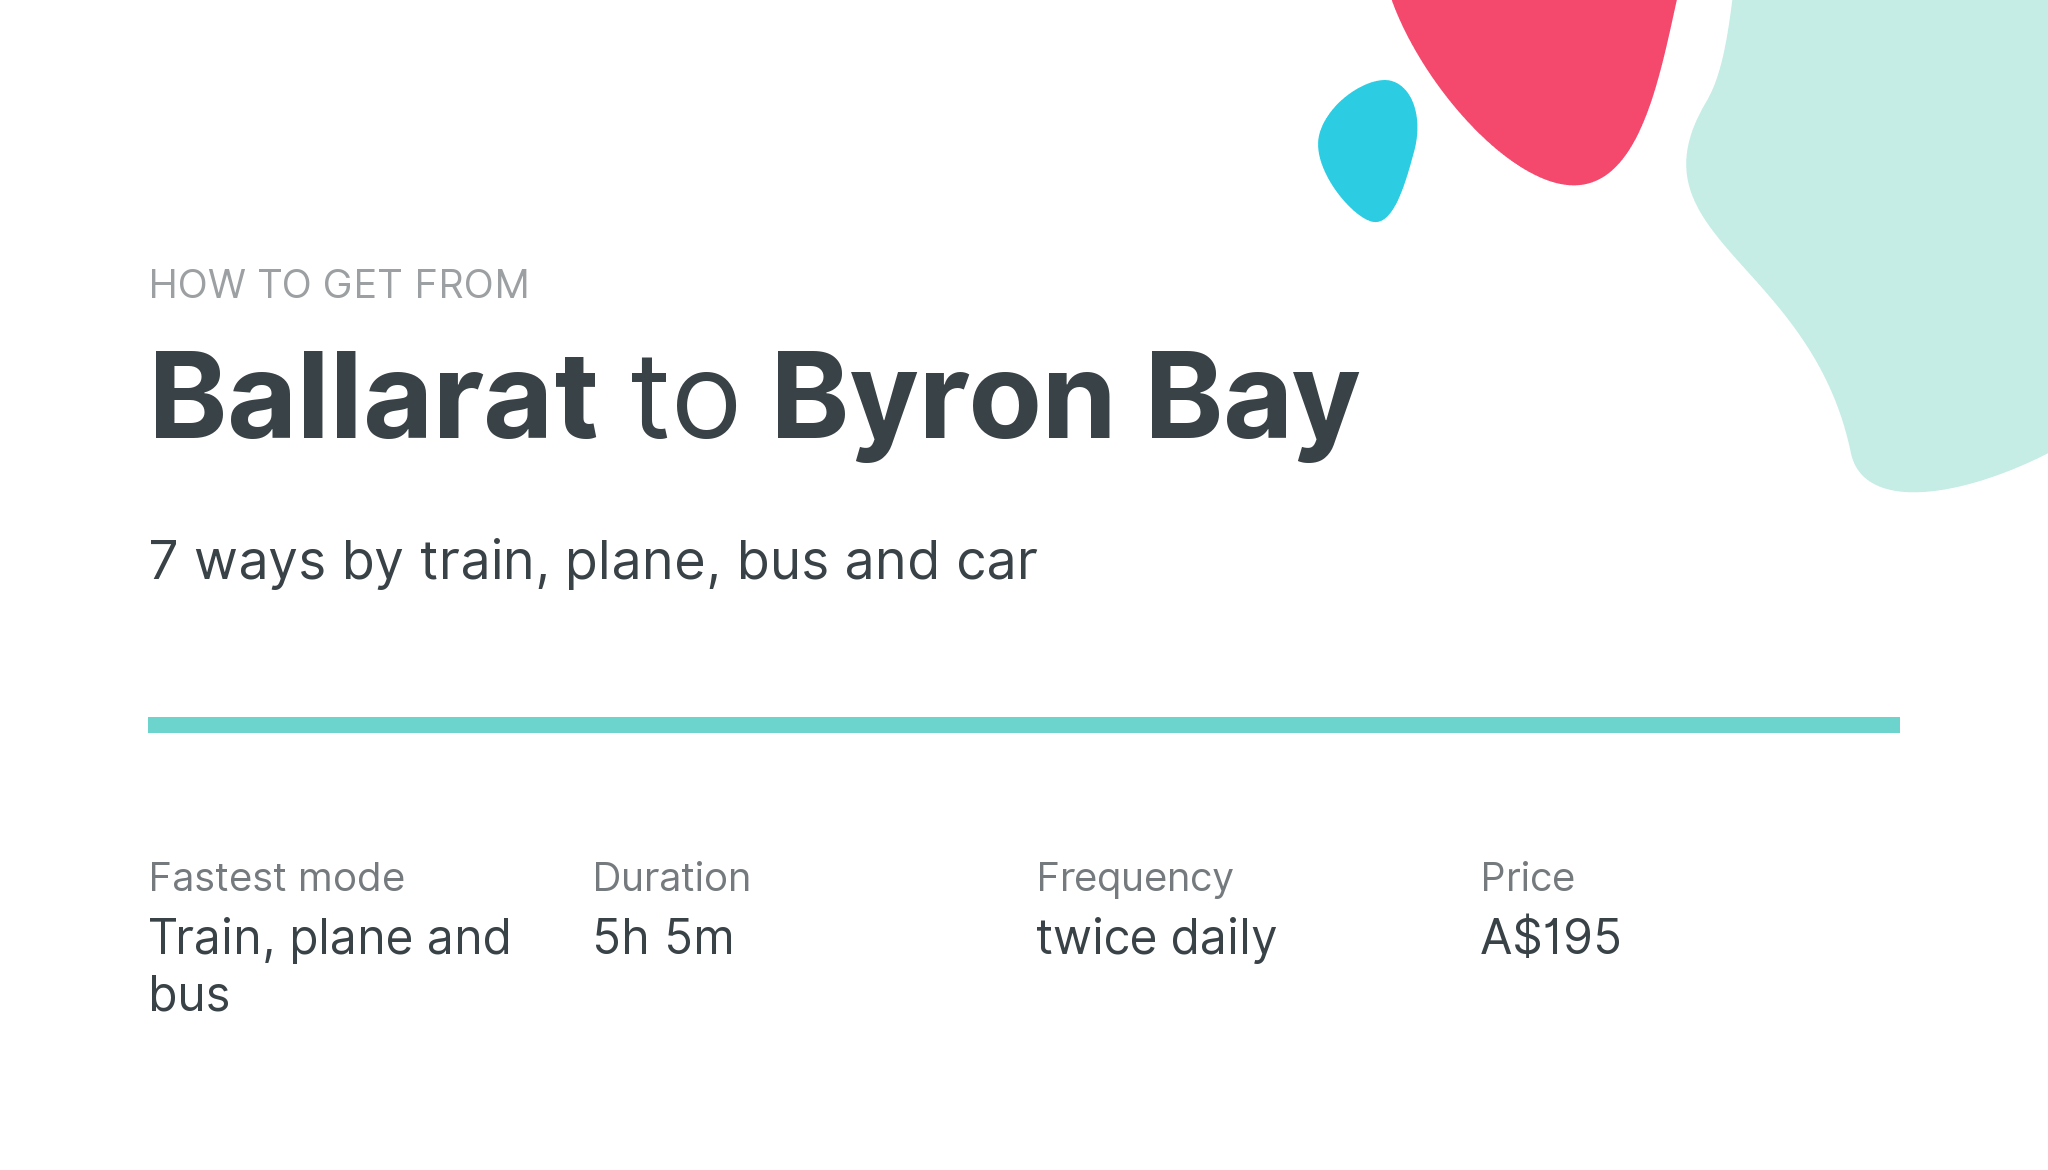 How do I get from Ballarat to Byron Bay